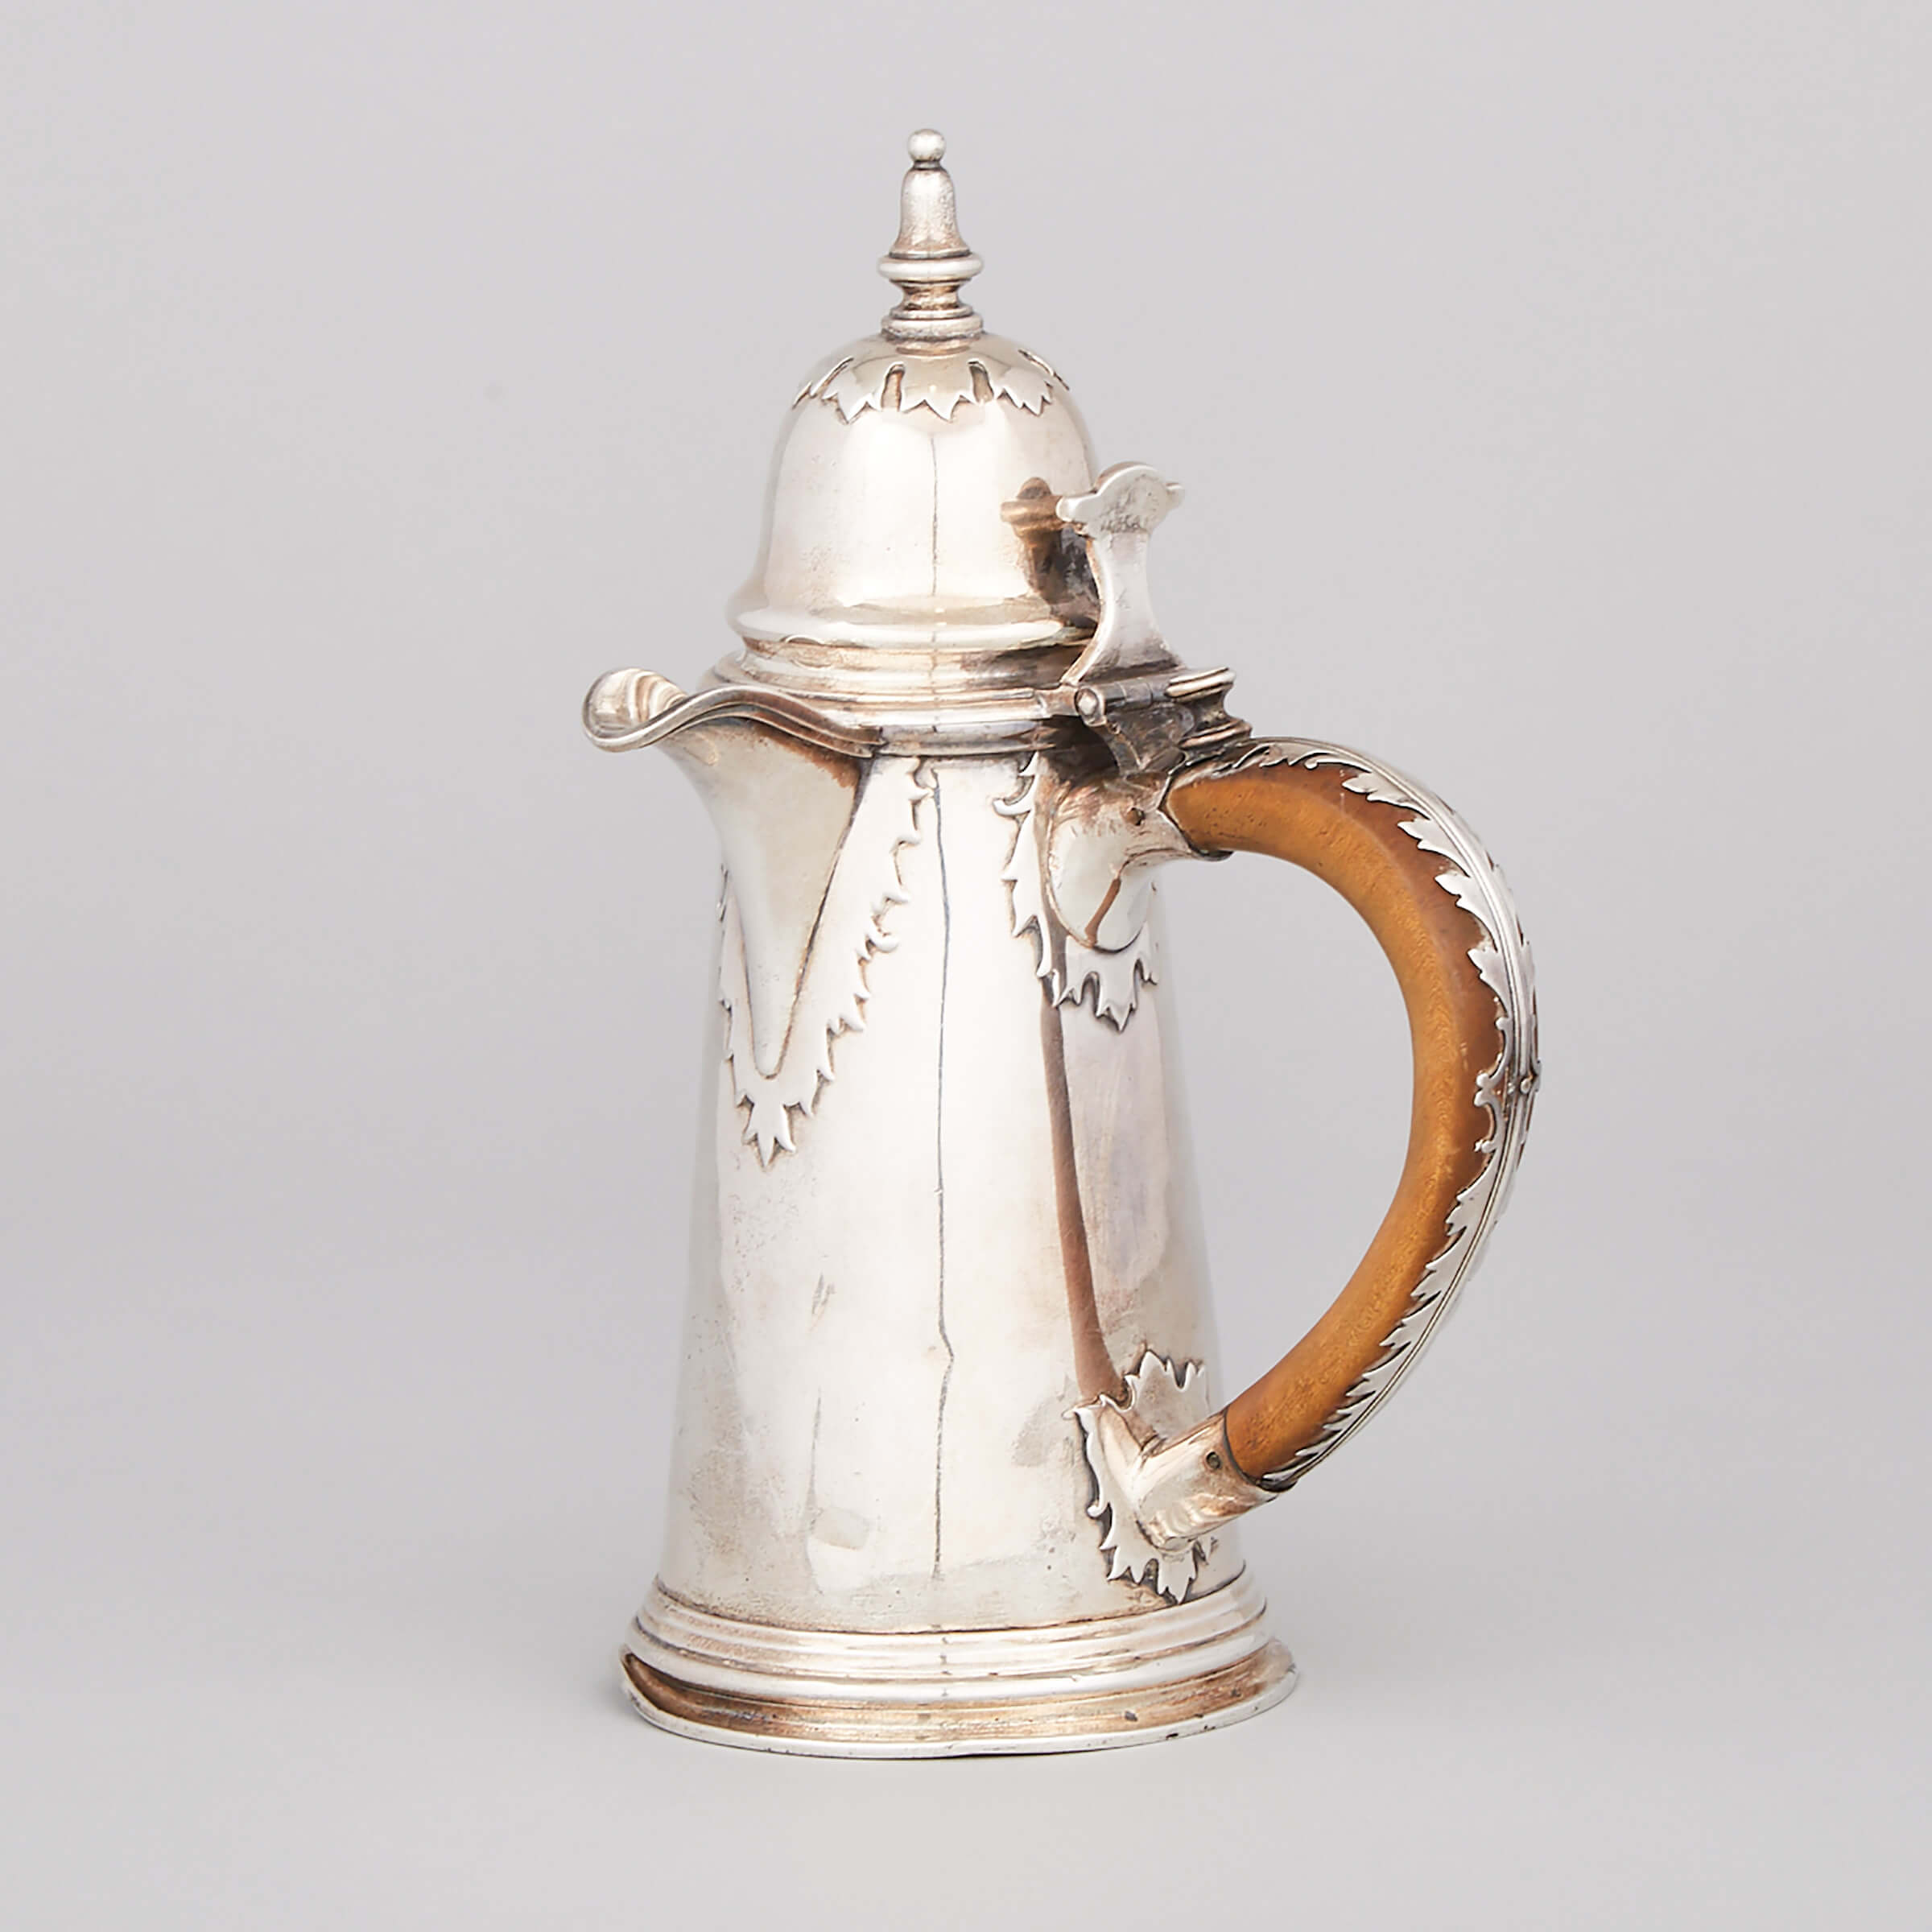 English Silver Queen Anne Style Hot Milk Pot, William Comyns, London, 1911